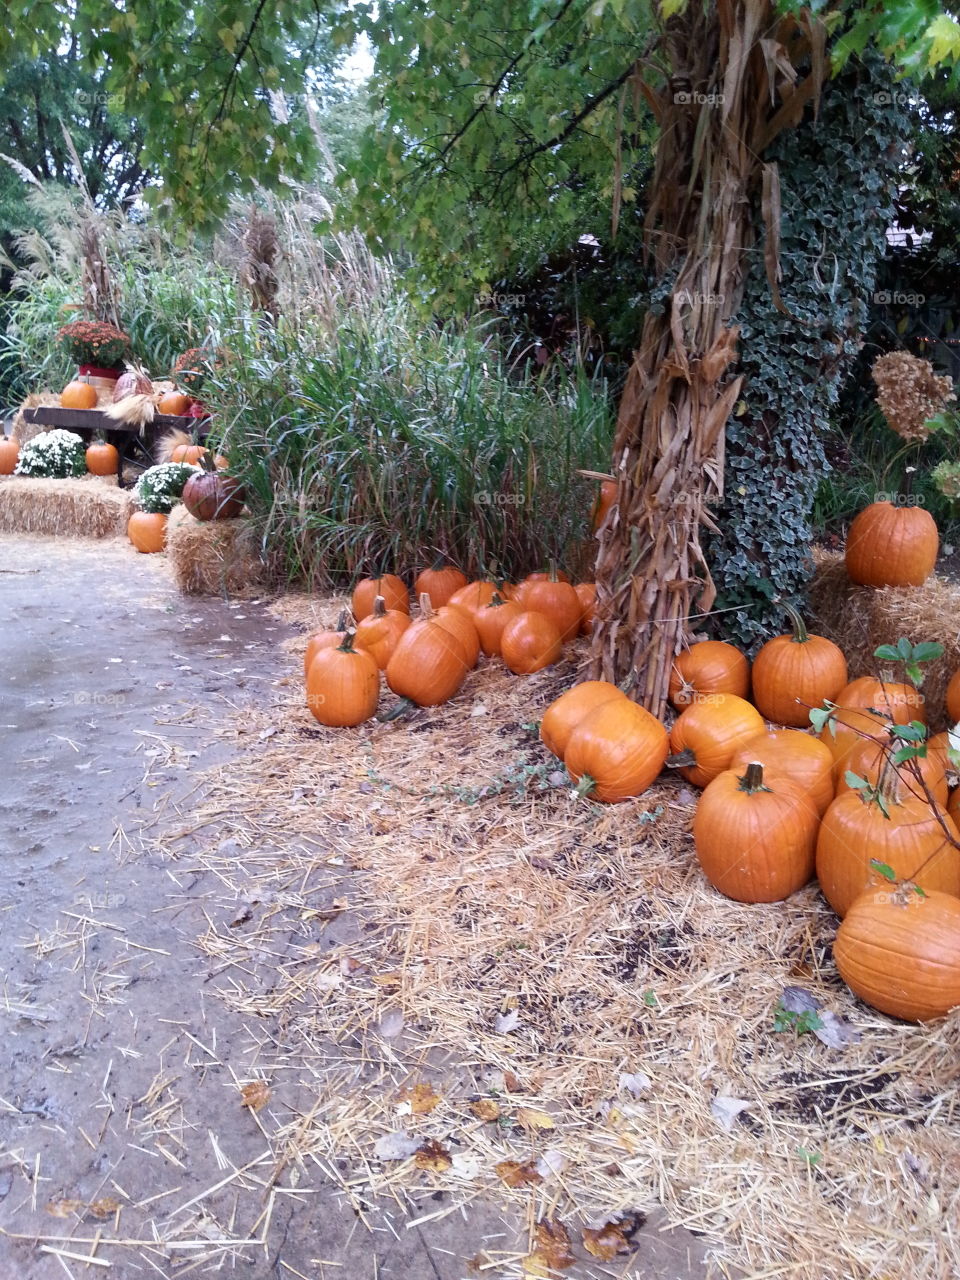 Groups of pumpkins